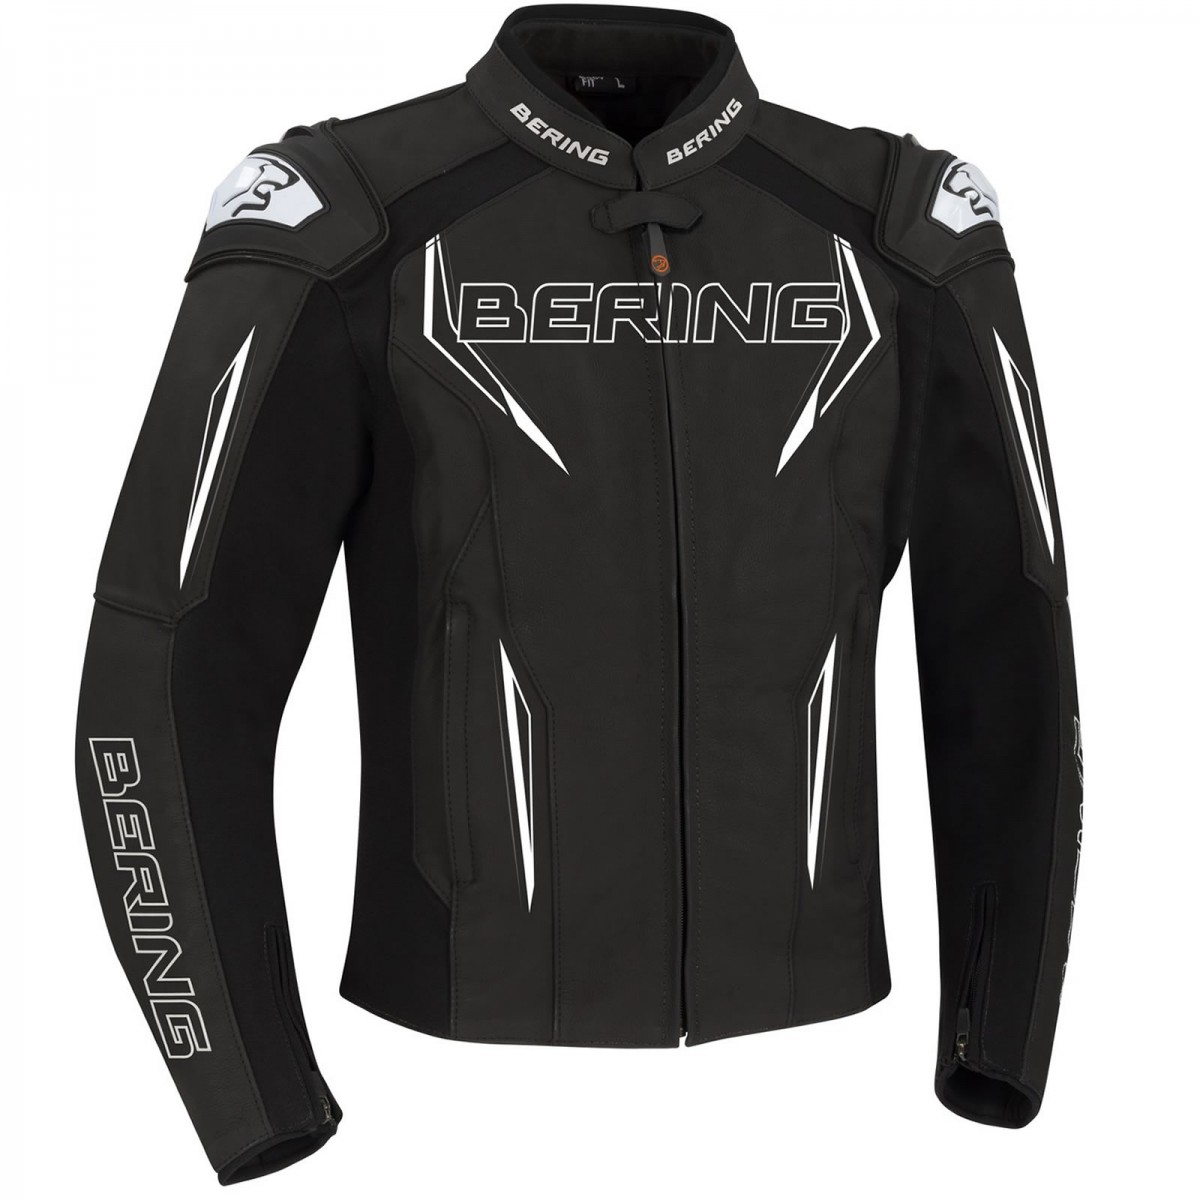 Image of Bering Sprint-R Leather Jacket Black White Gray Size S EN